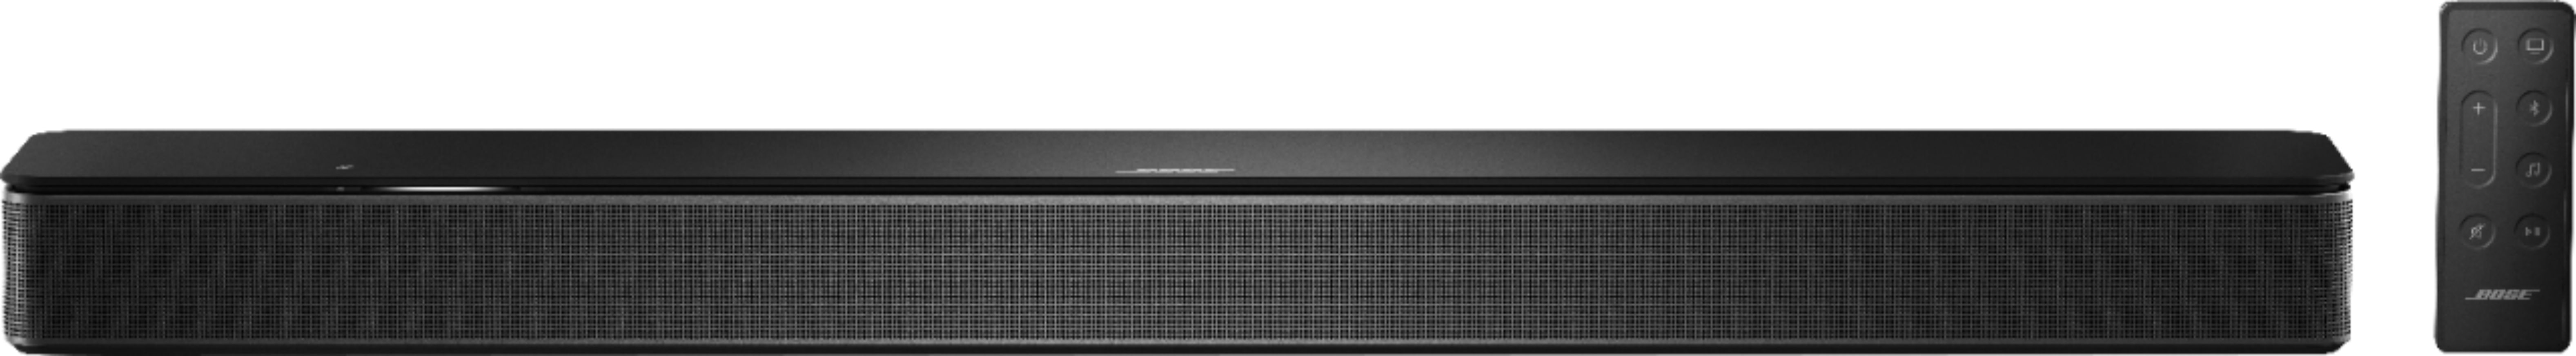 Amount of Assimilate Sloppy Bose Smart Soundbar 300 with Voice Assistant Black 843299-1100 - Best Buy